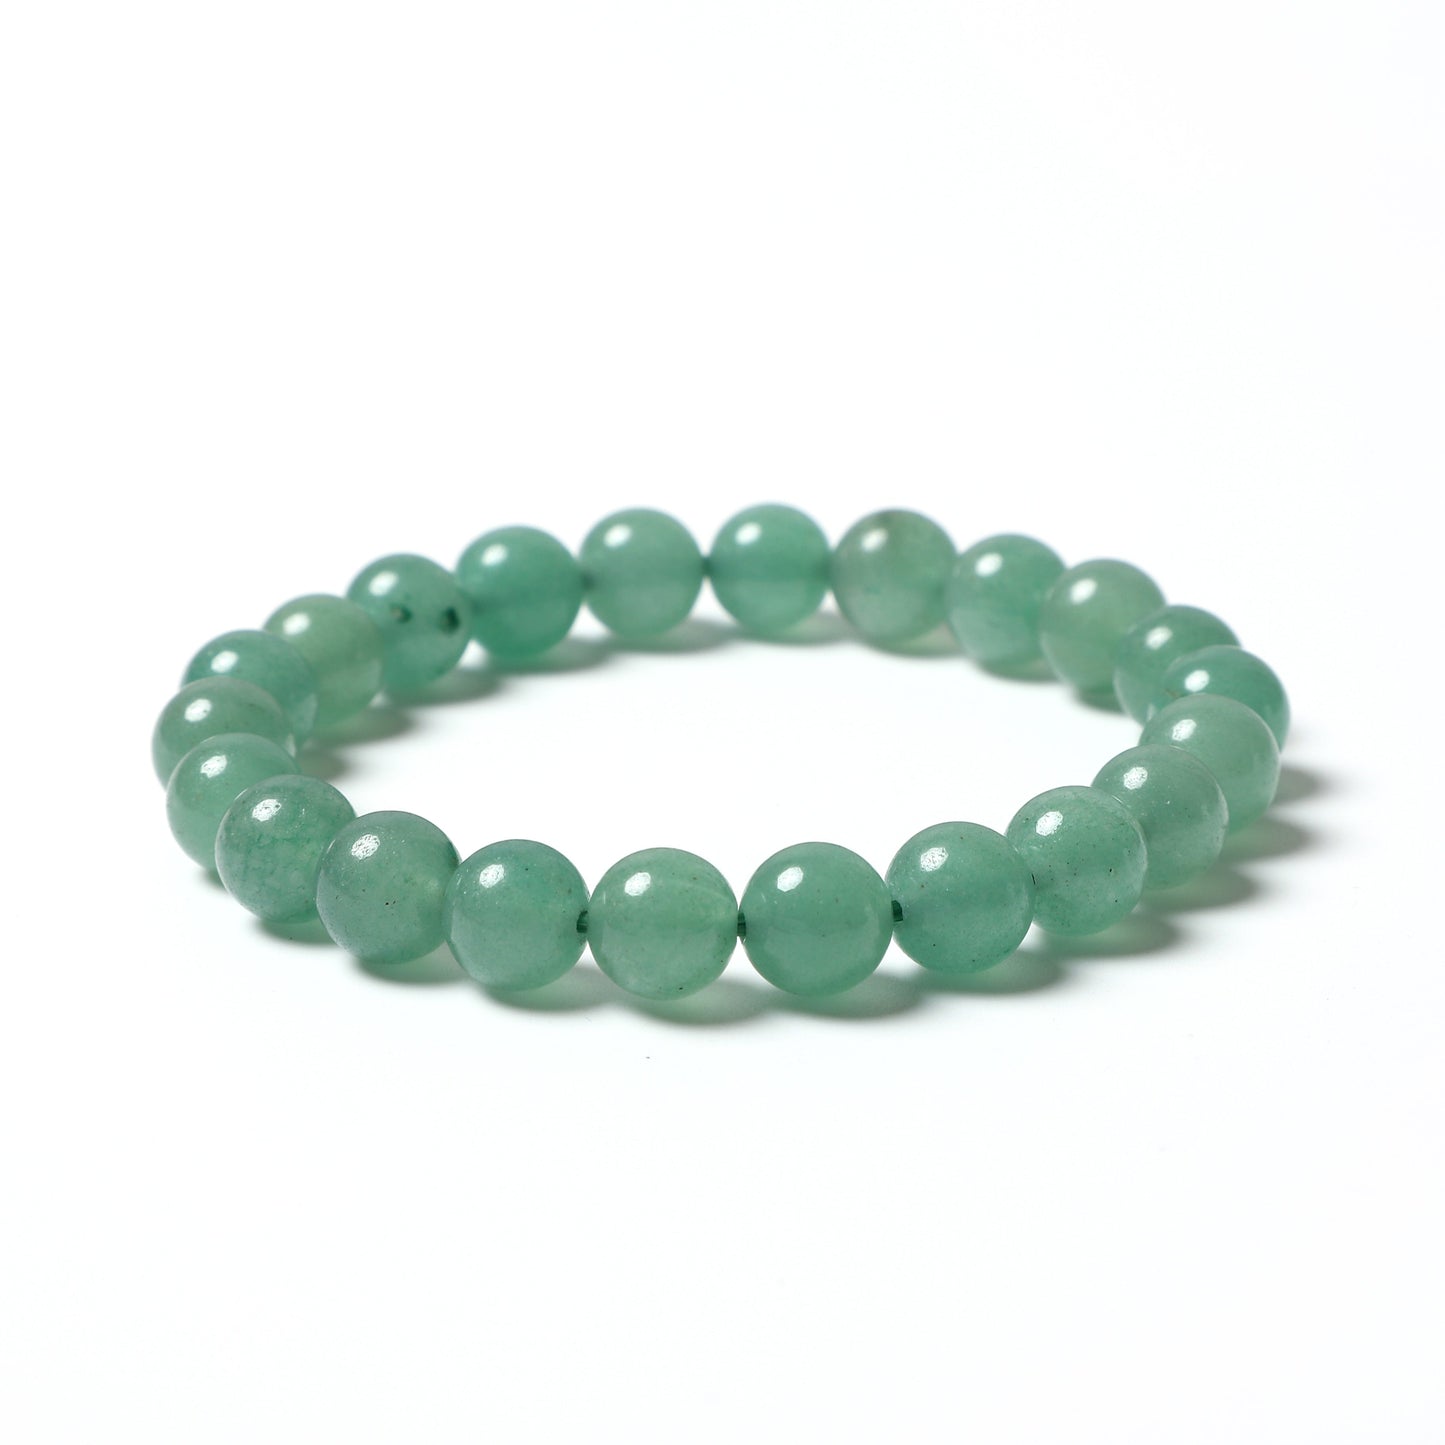 Green aventurine  bracelet ROLA DIRECT BUY